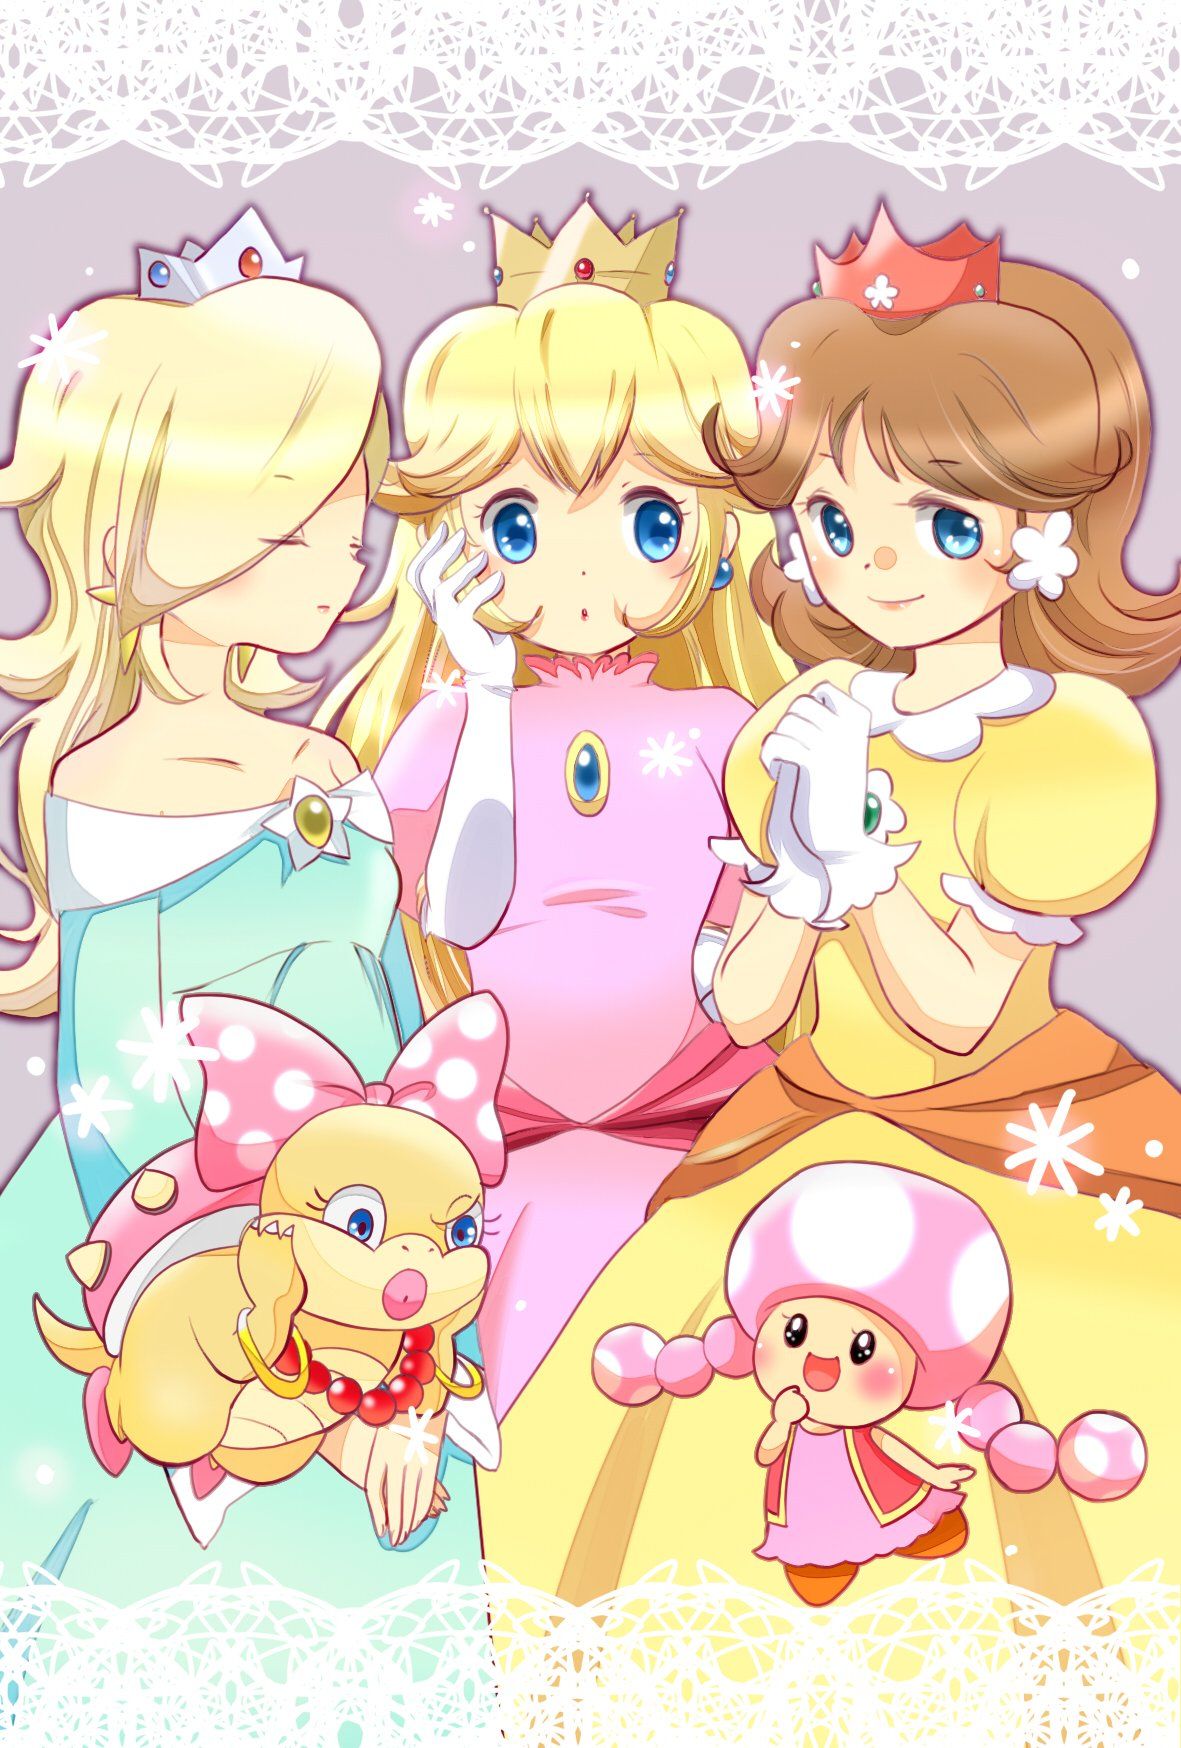 Peach, Daisy, and Rosalina are all holding a baby mushroom - Princess Peach